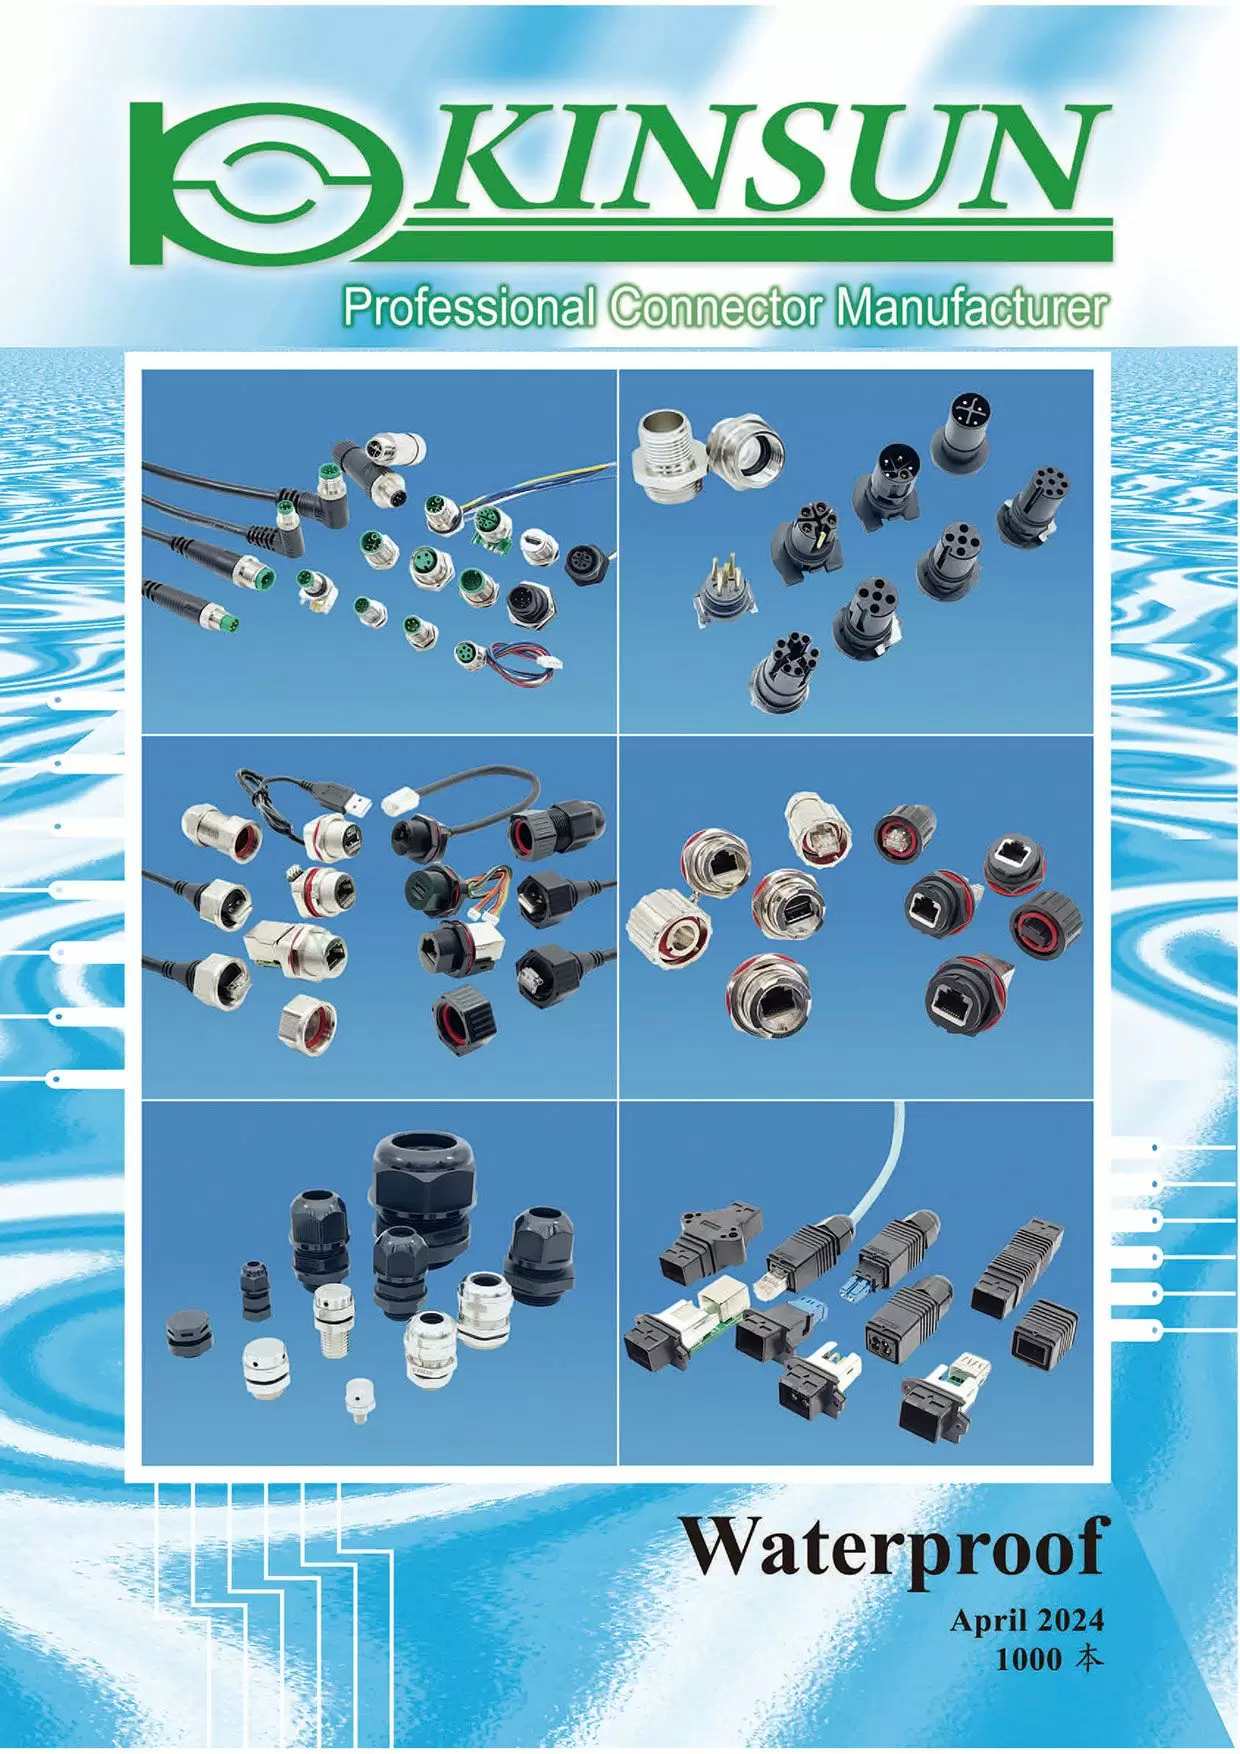 Kinsun waterproof connector catalog